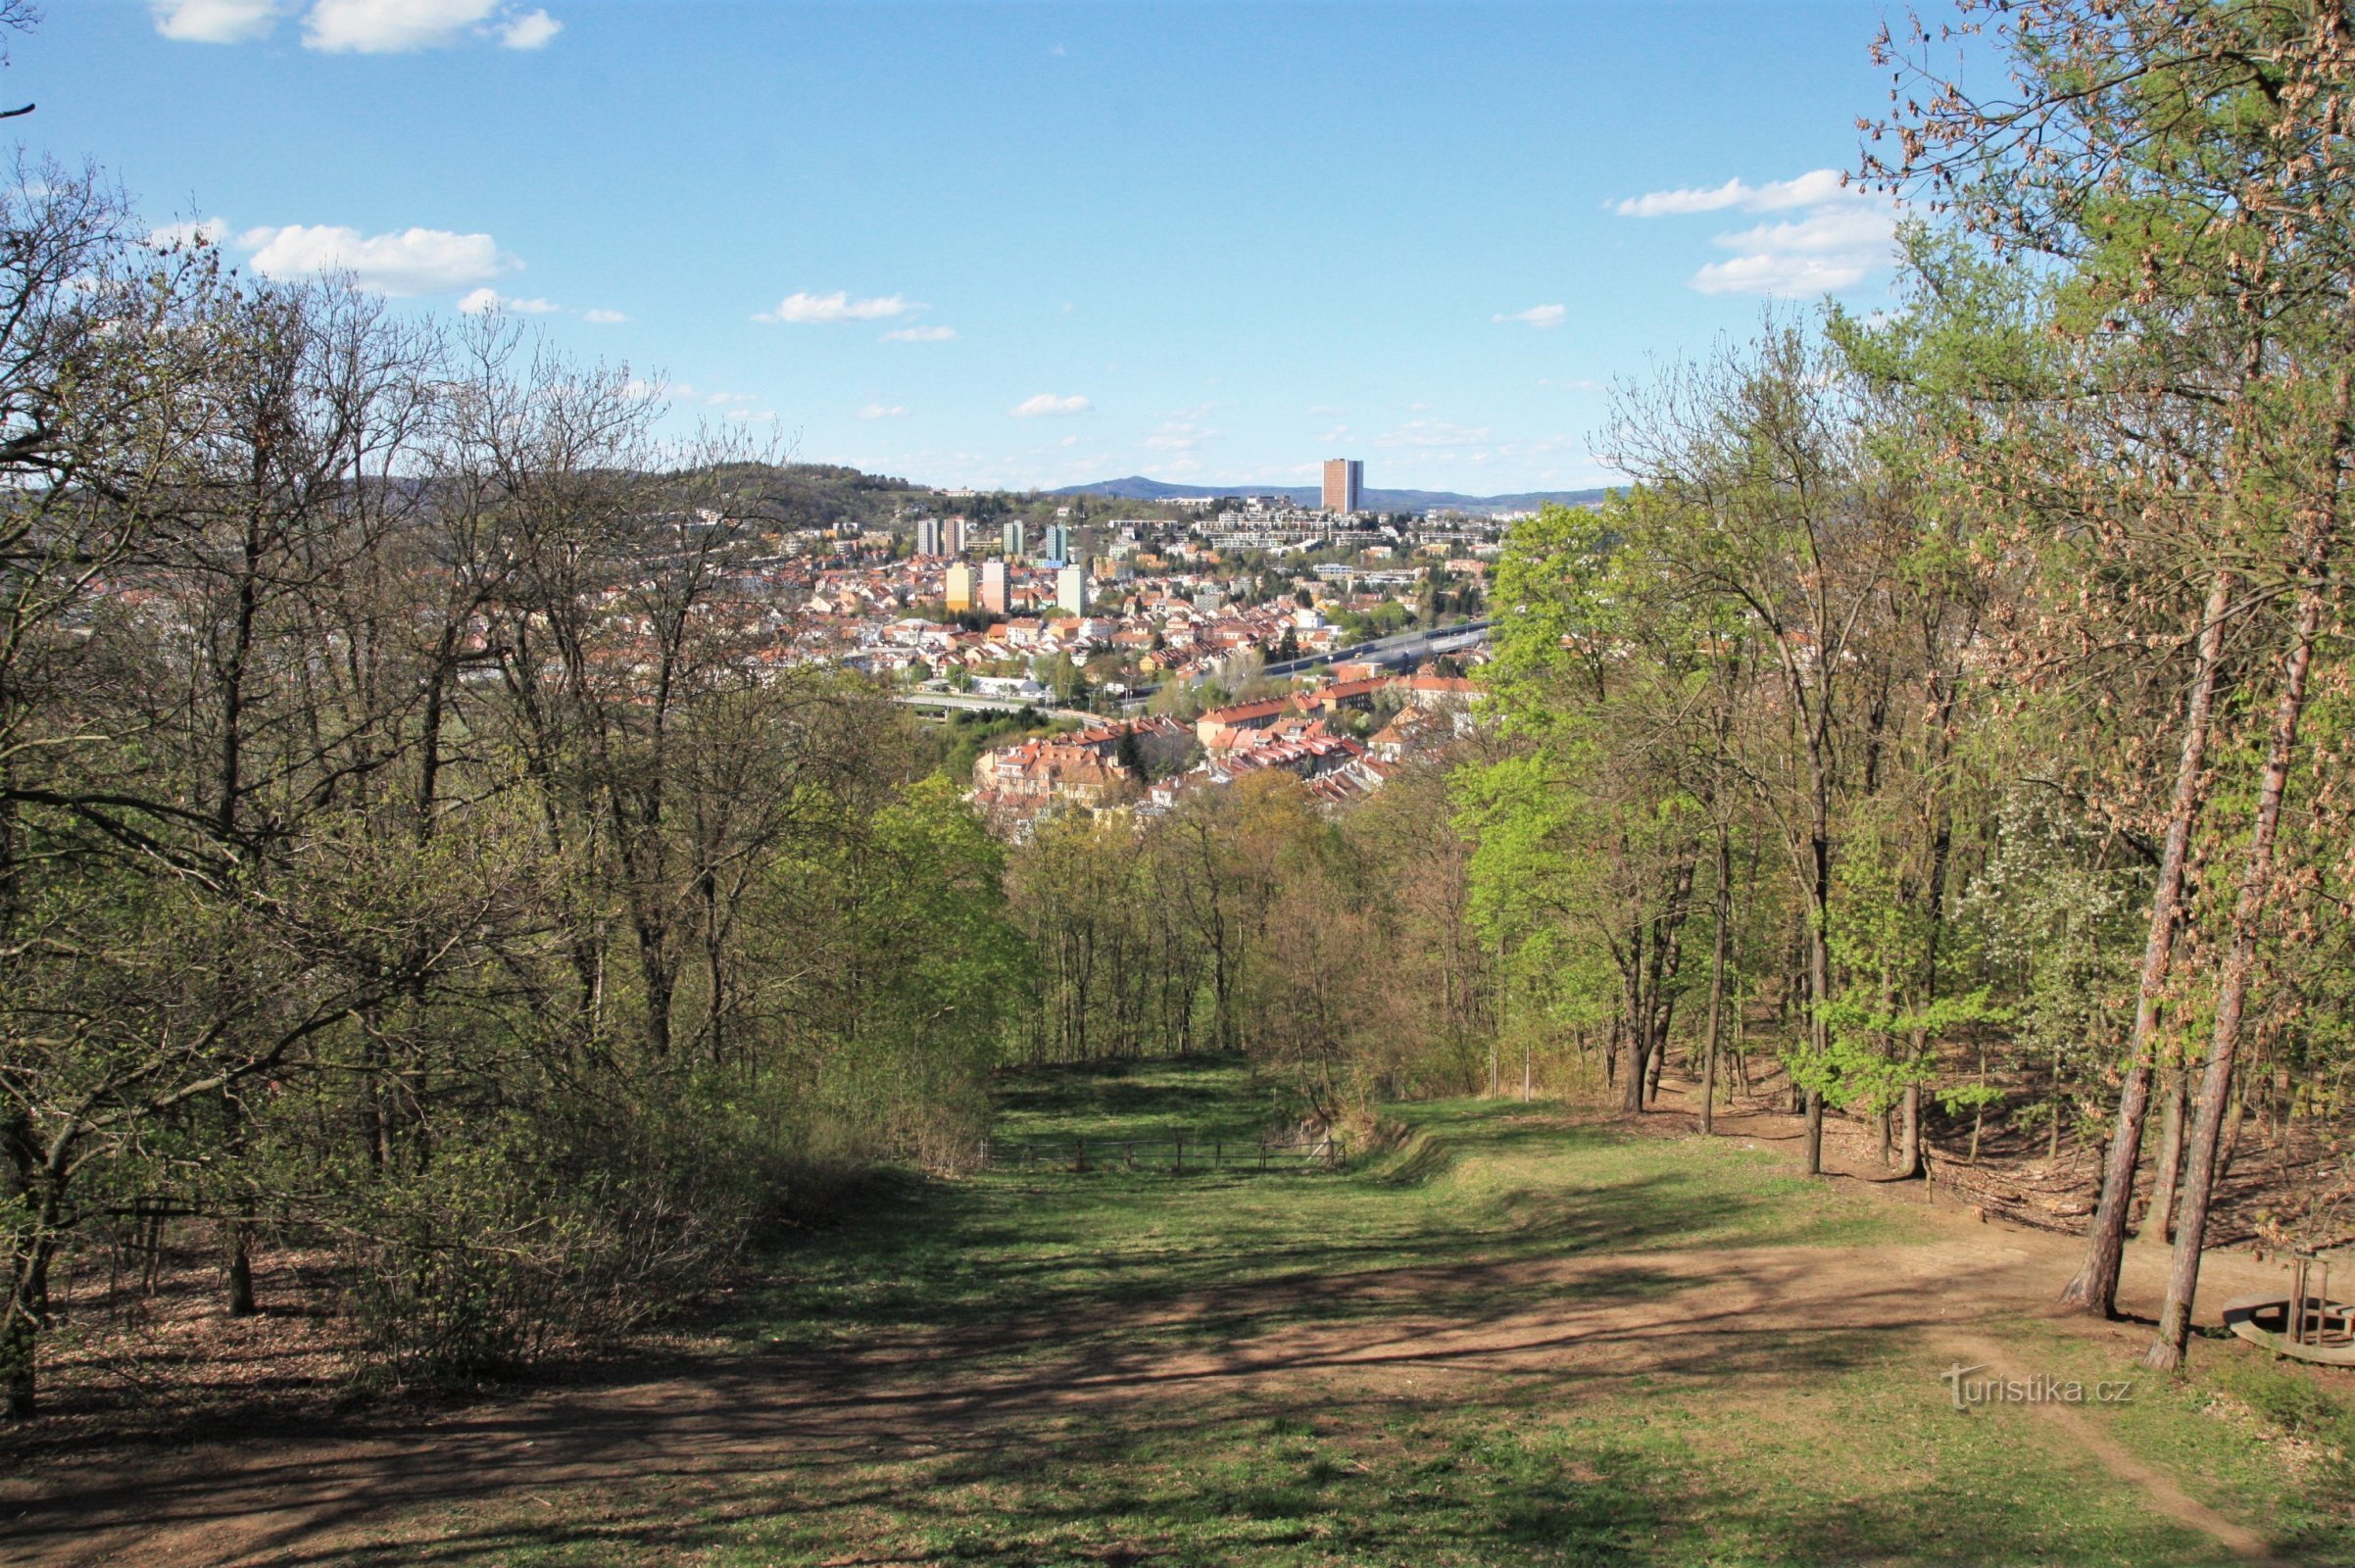 Pregled nekdanjega pobočja na Žabovřeské